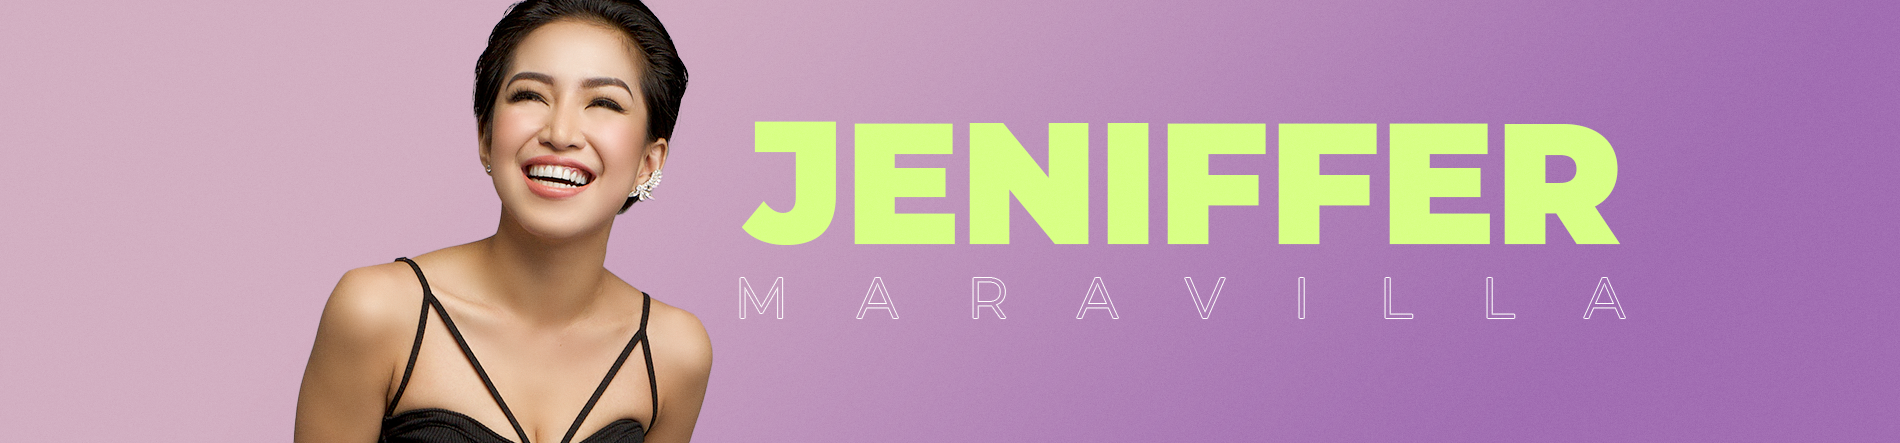 Jeniffer Maravilla Desktop Banner